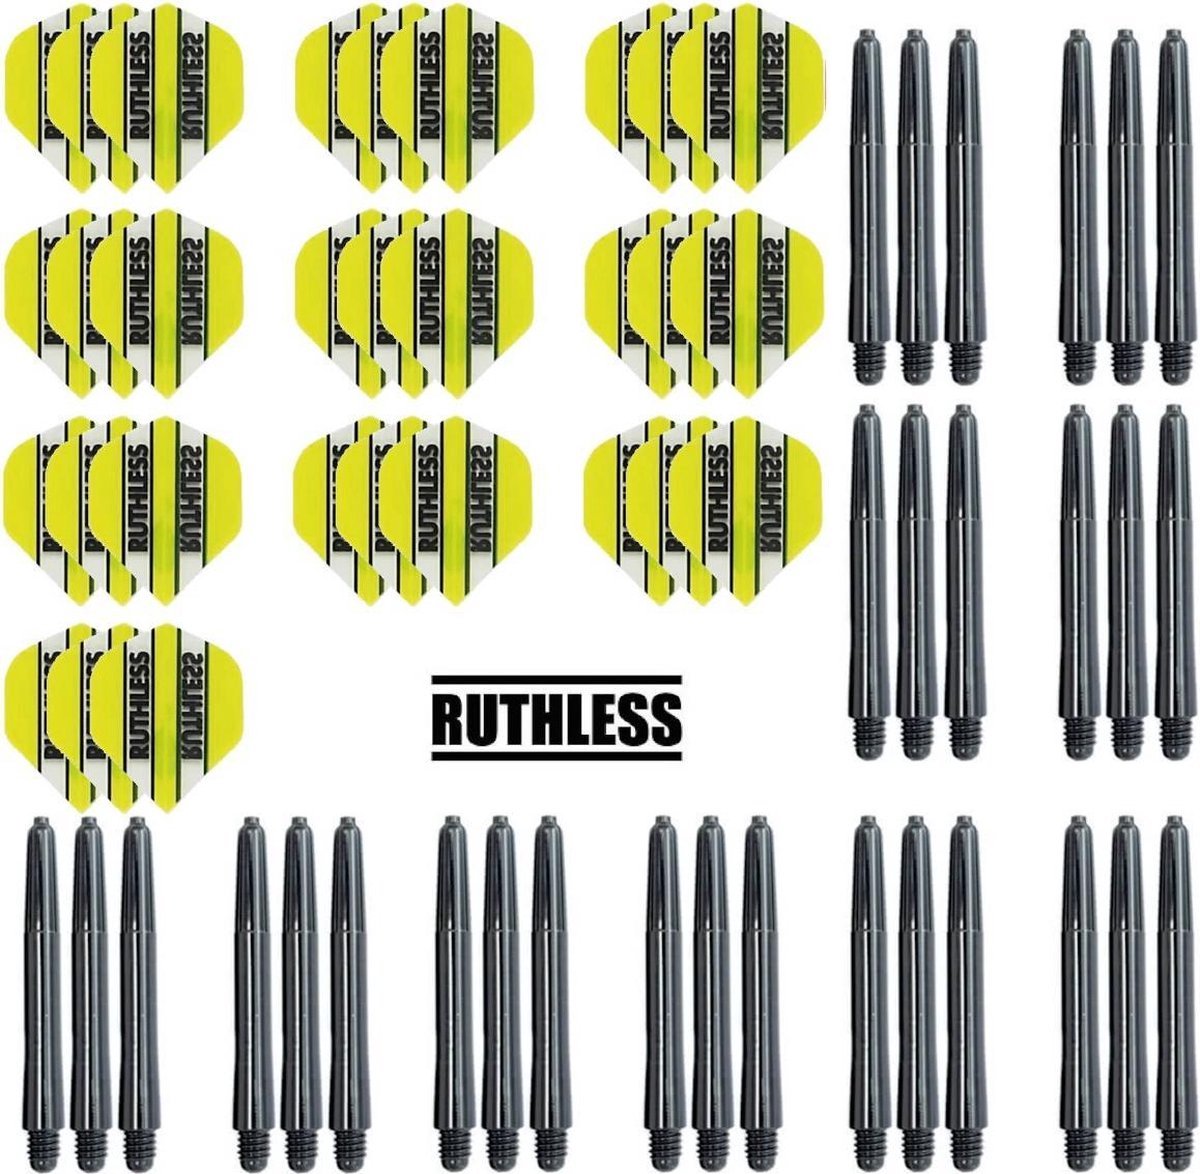 10 Sets Ruthless Flights Geel – plus 10 sets dart shafts – inbetween